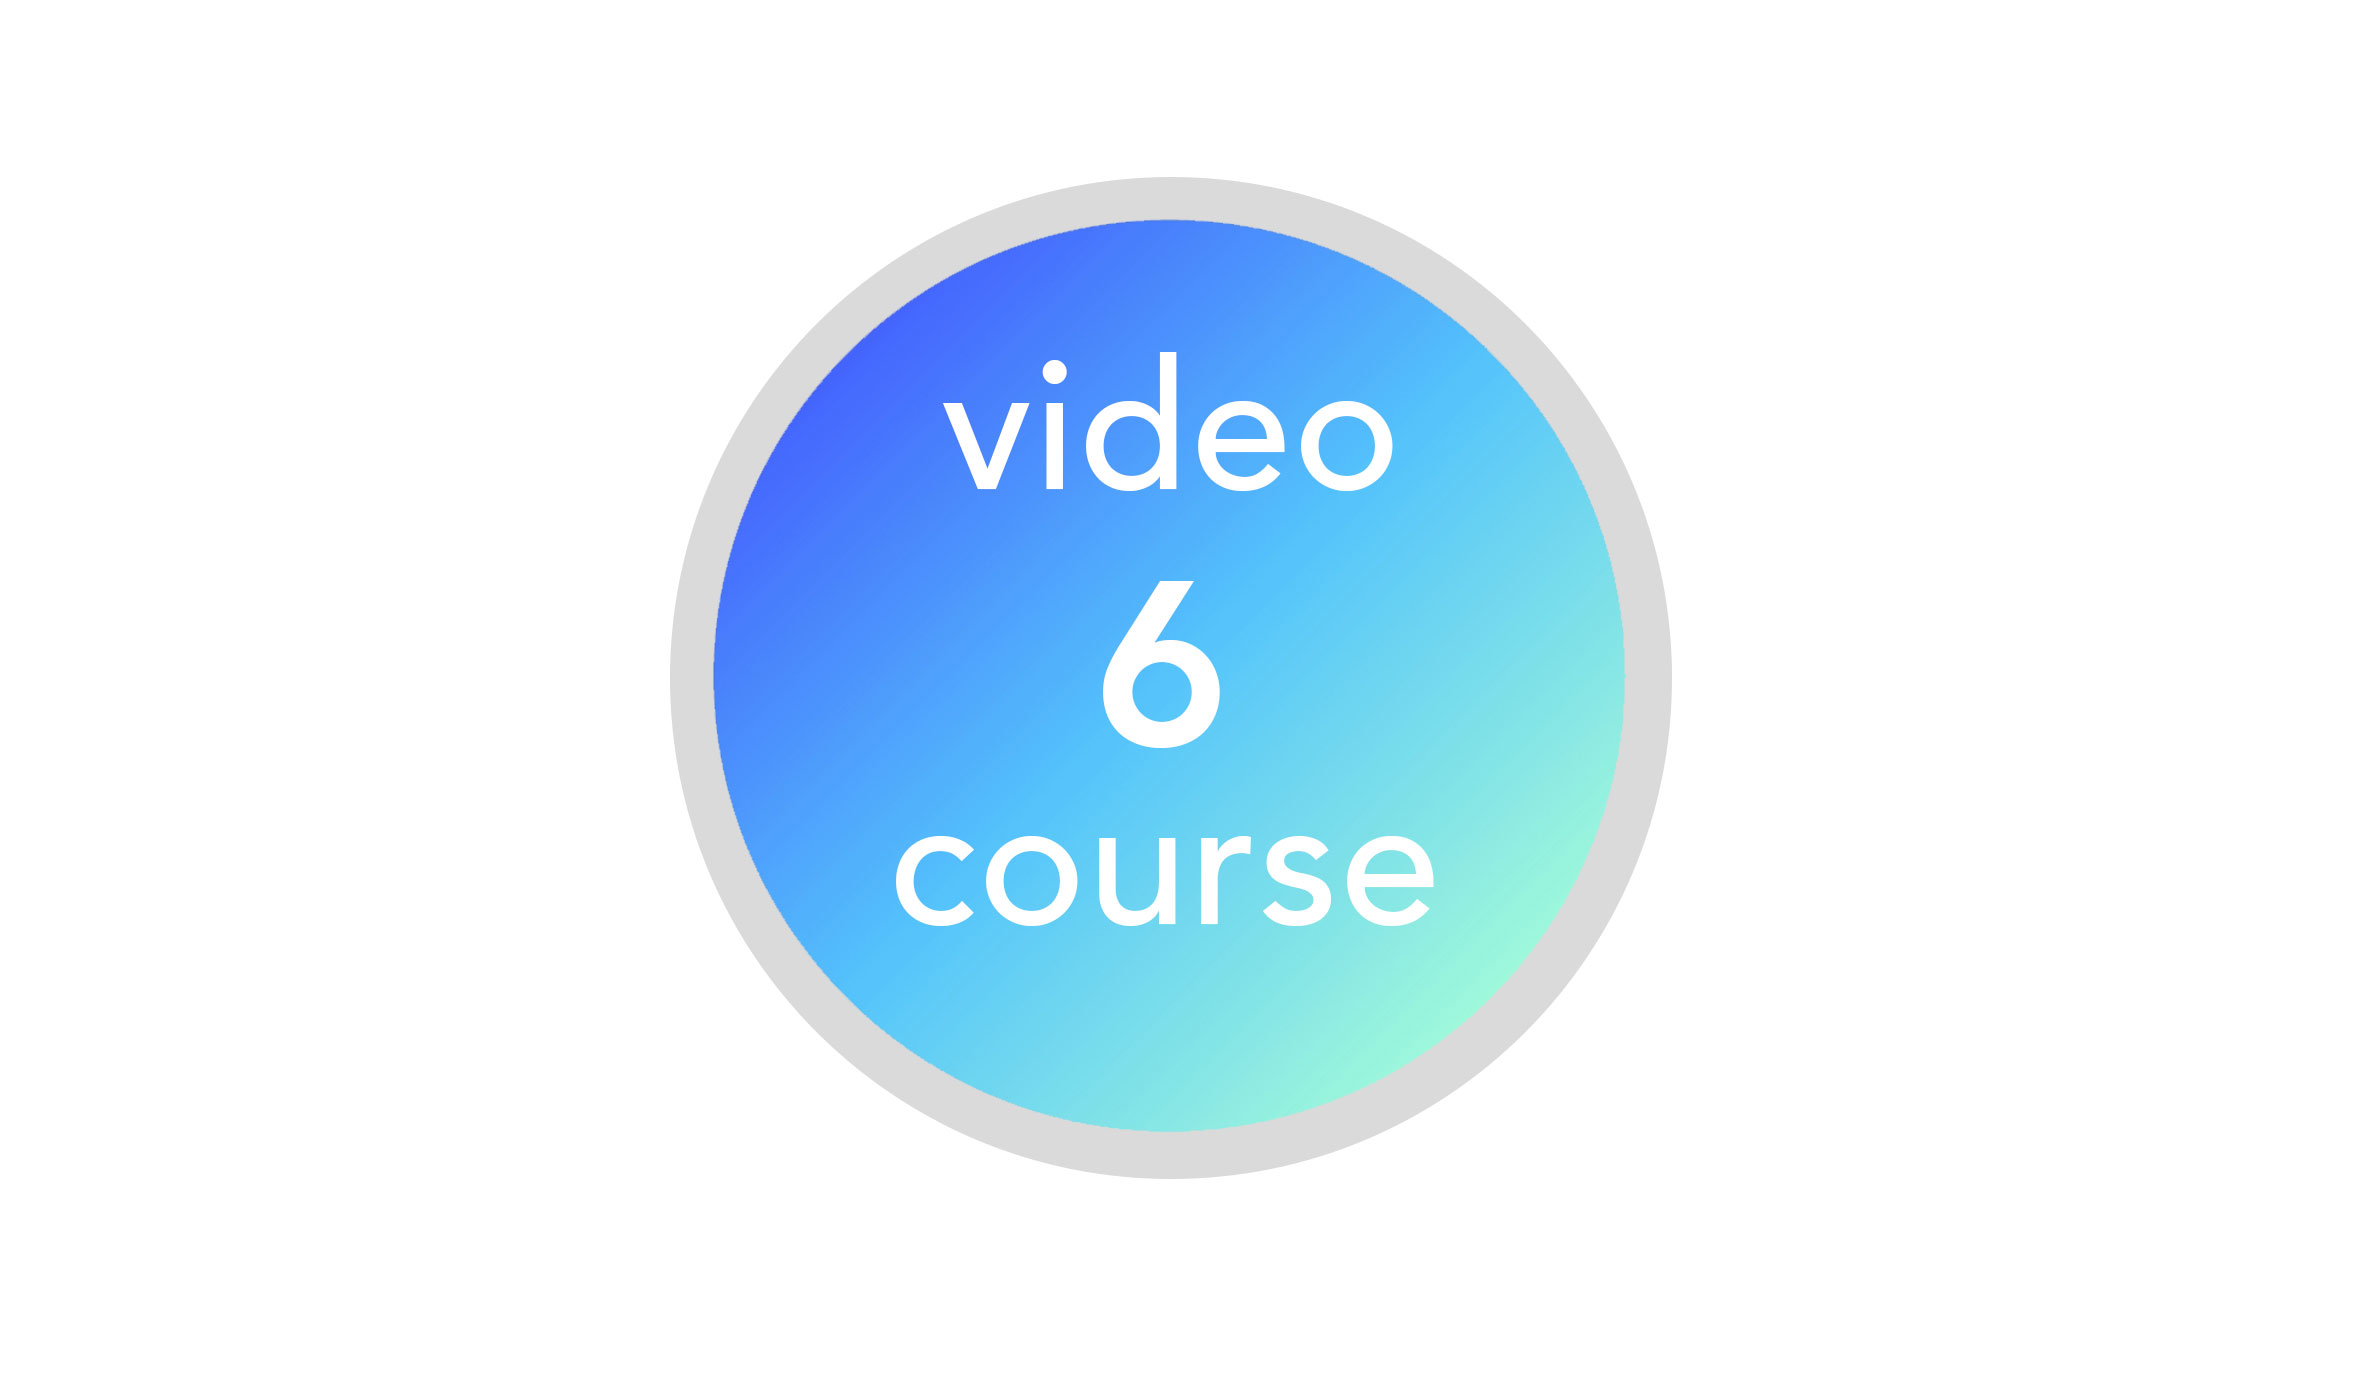 kit-homelab-server-video-course-6